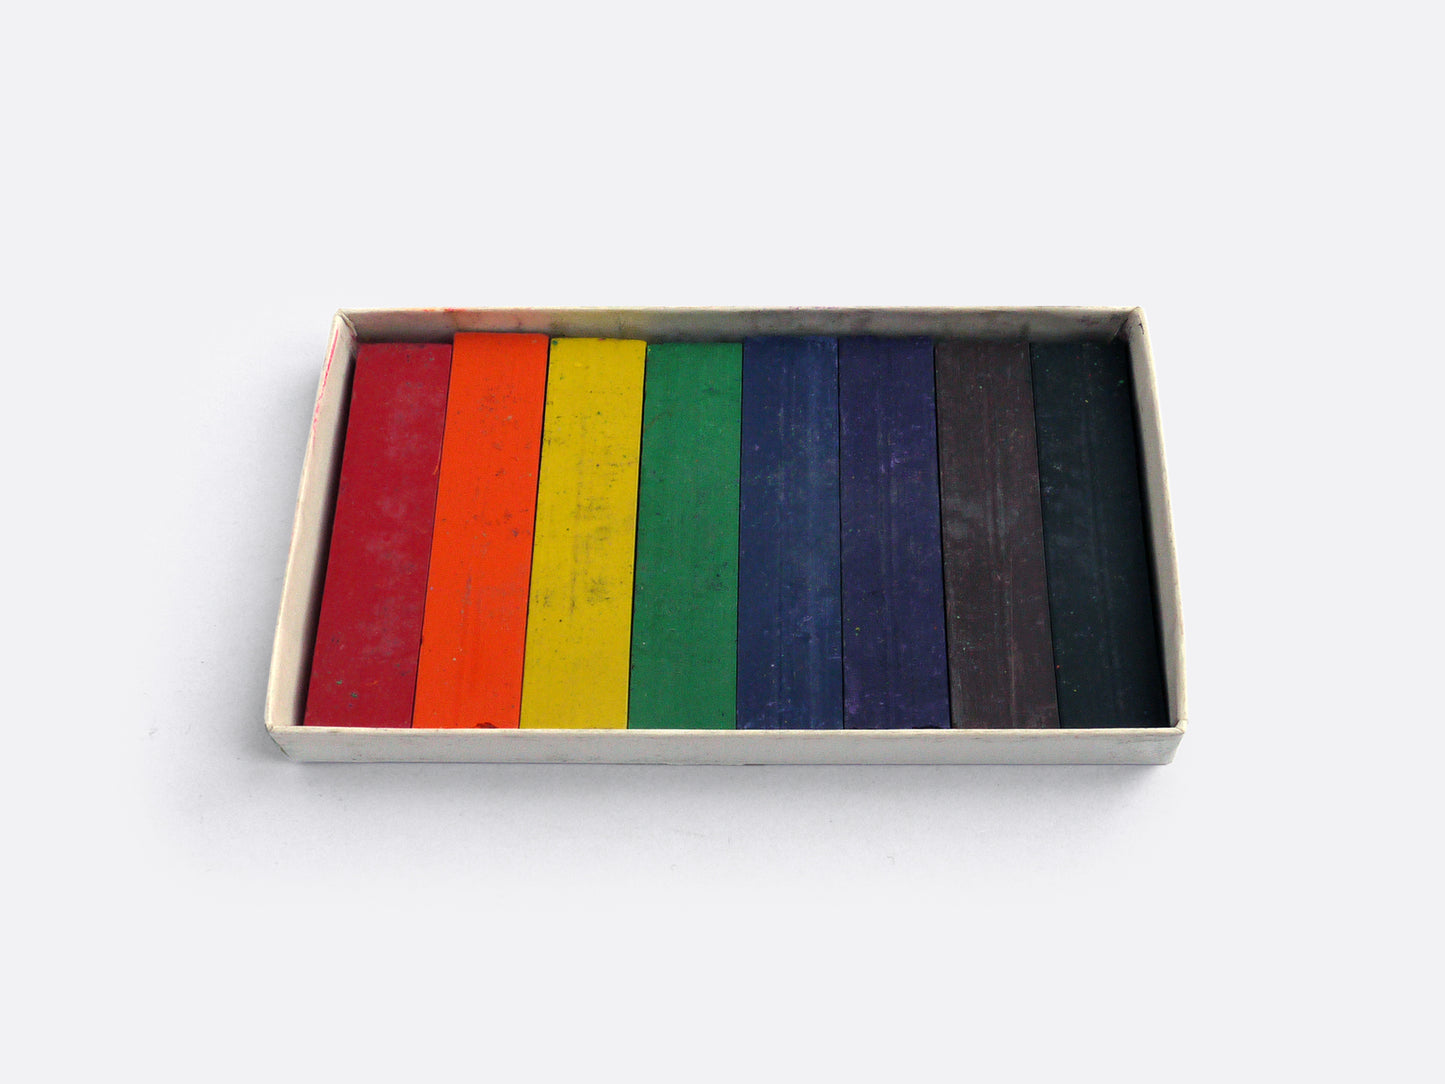 Tru-tone Crayons (1970s)